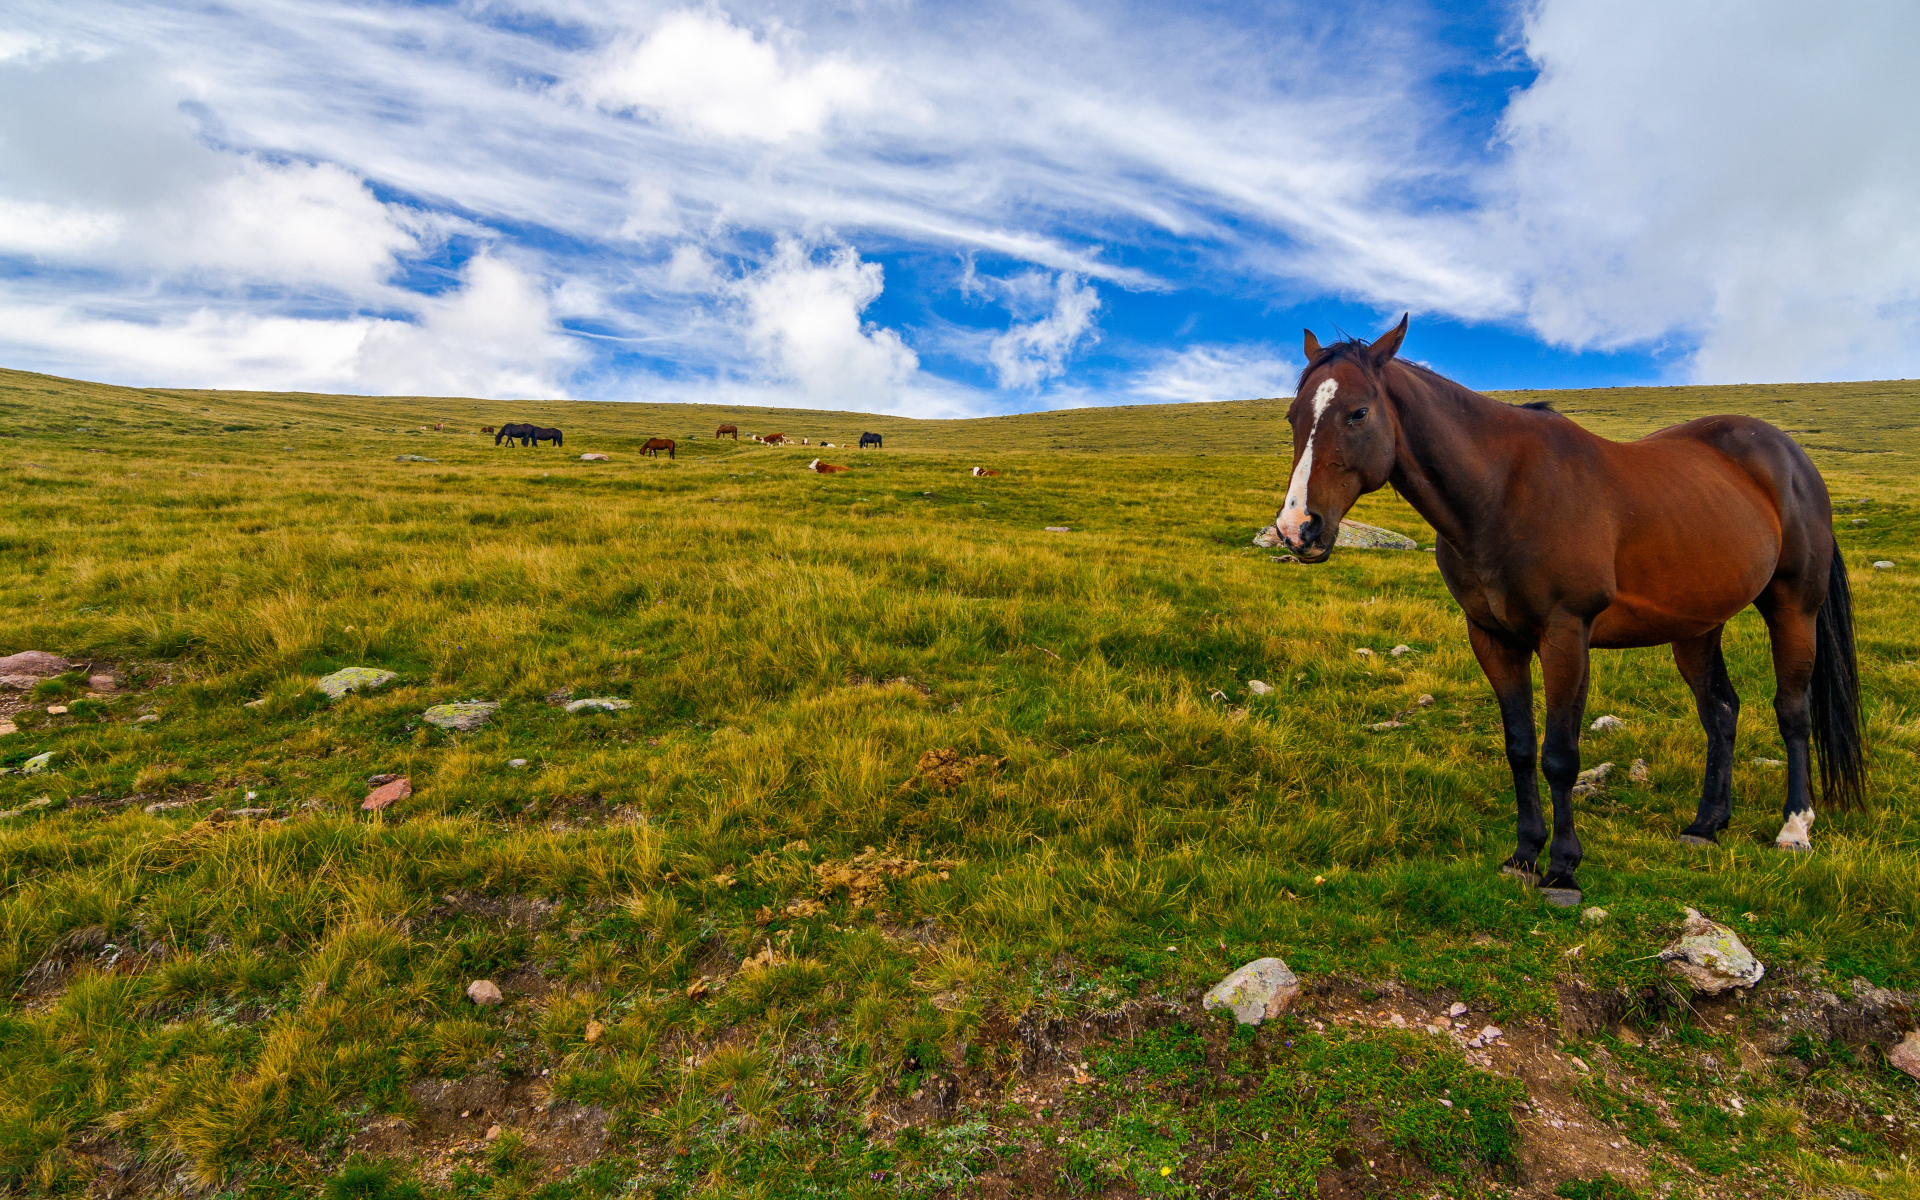 A horse grazes on a field under a beautiful sky